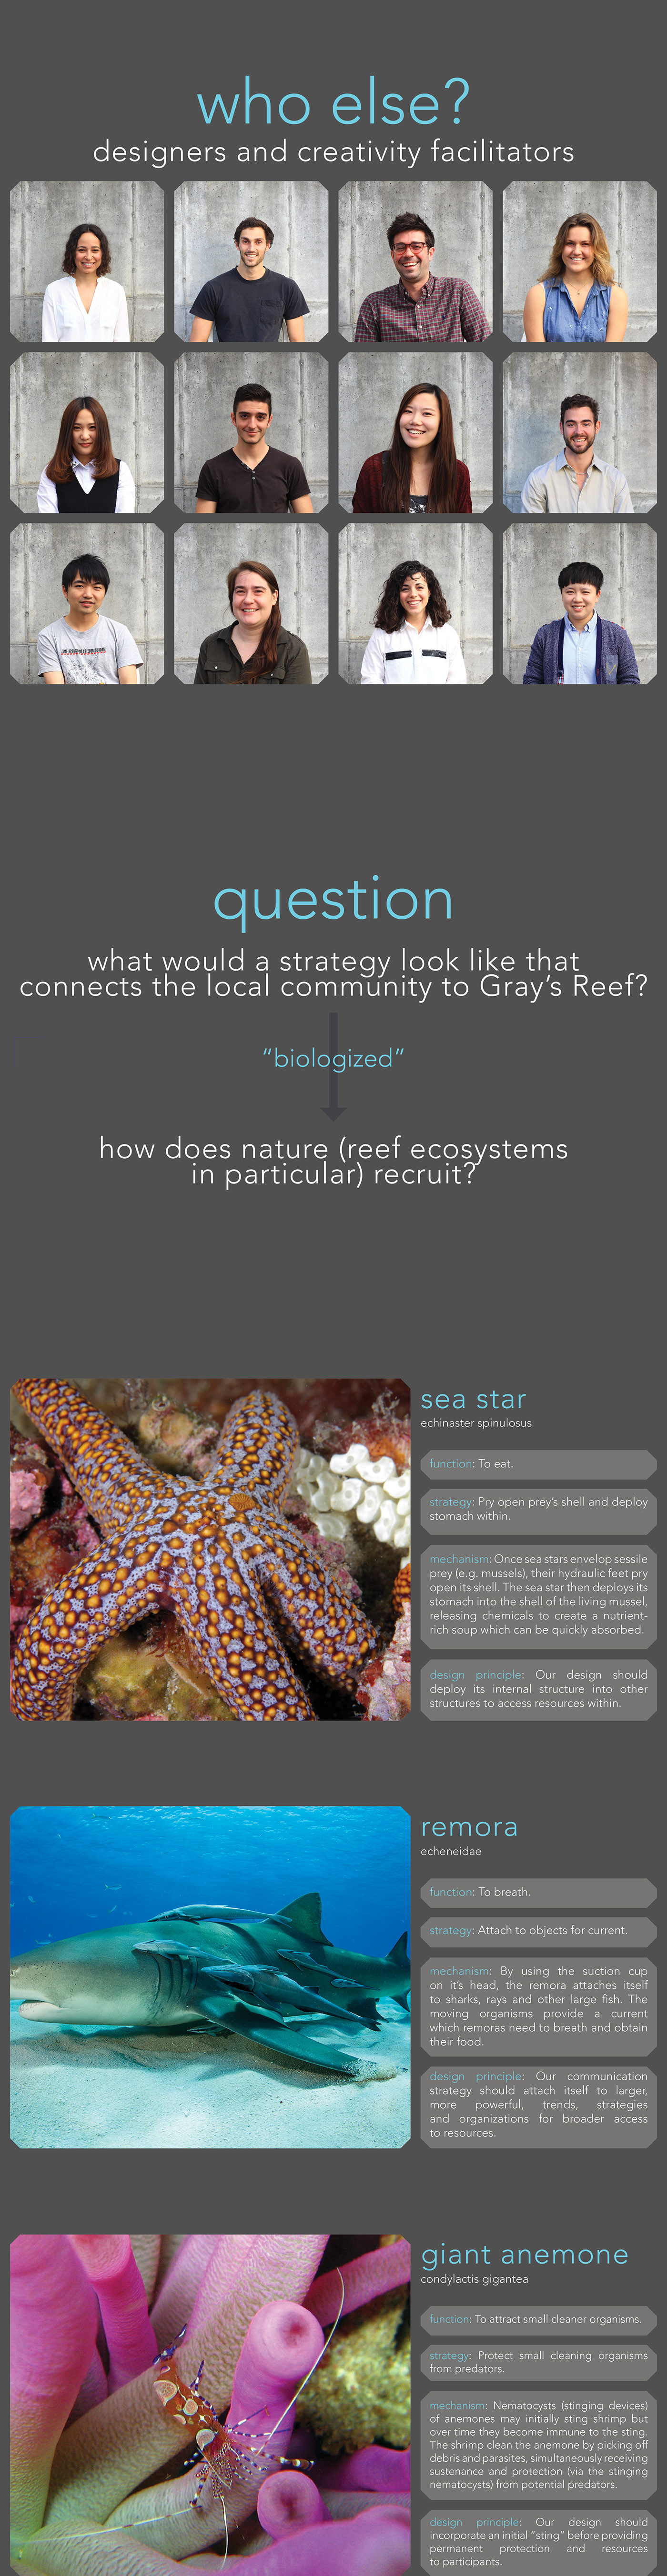 marine stewardship noaa Grey's Reef Ocean creative thinking facilitation